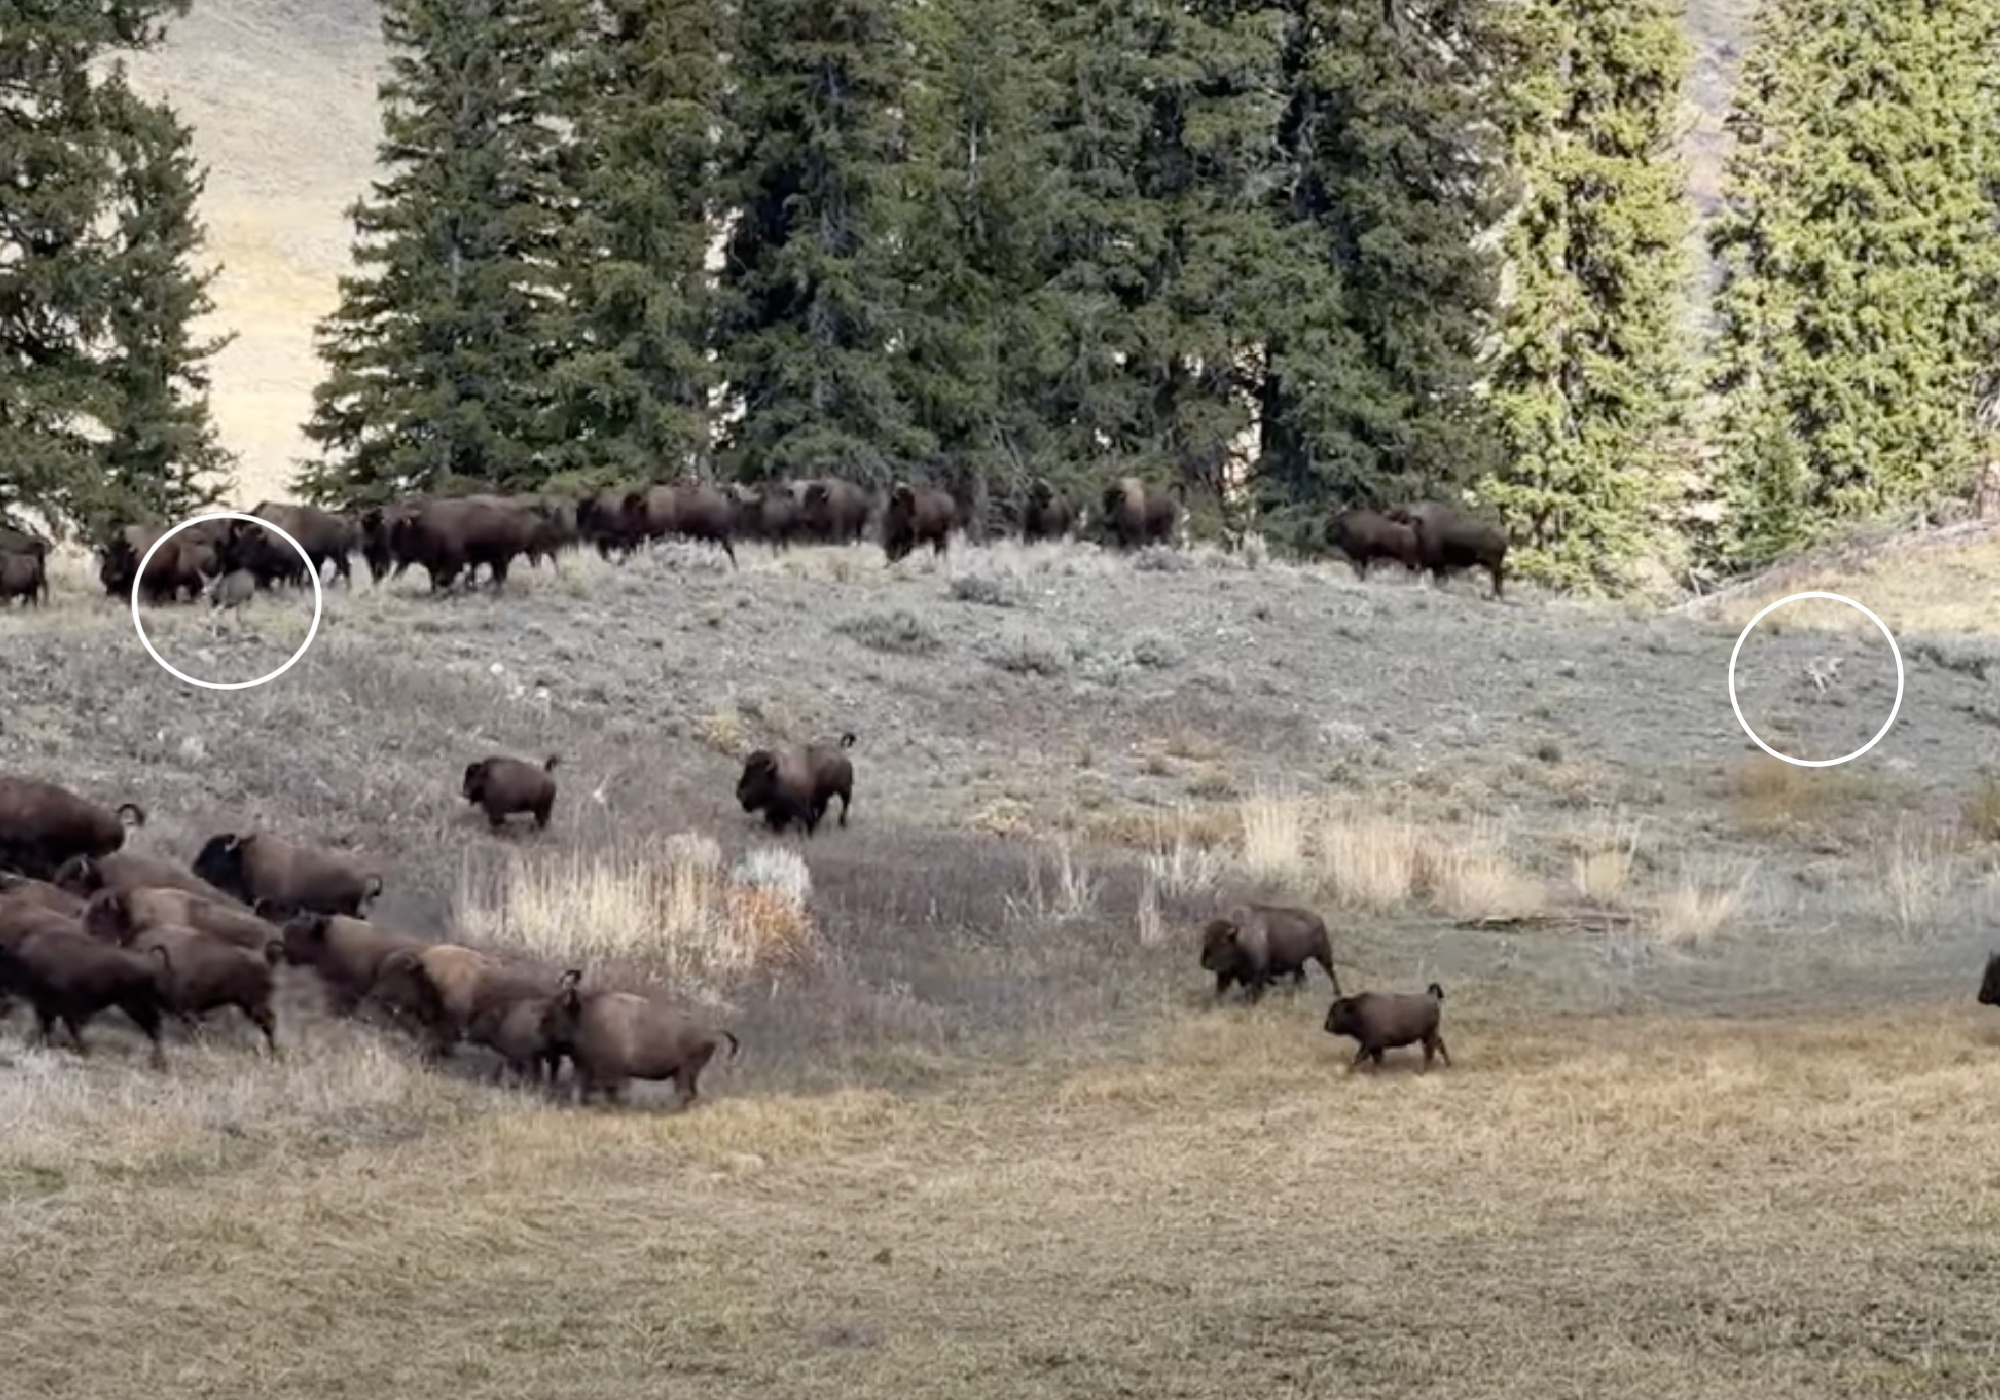 Coyote chases deer into bison herd